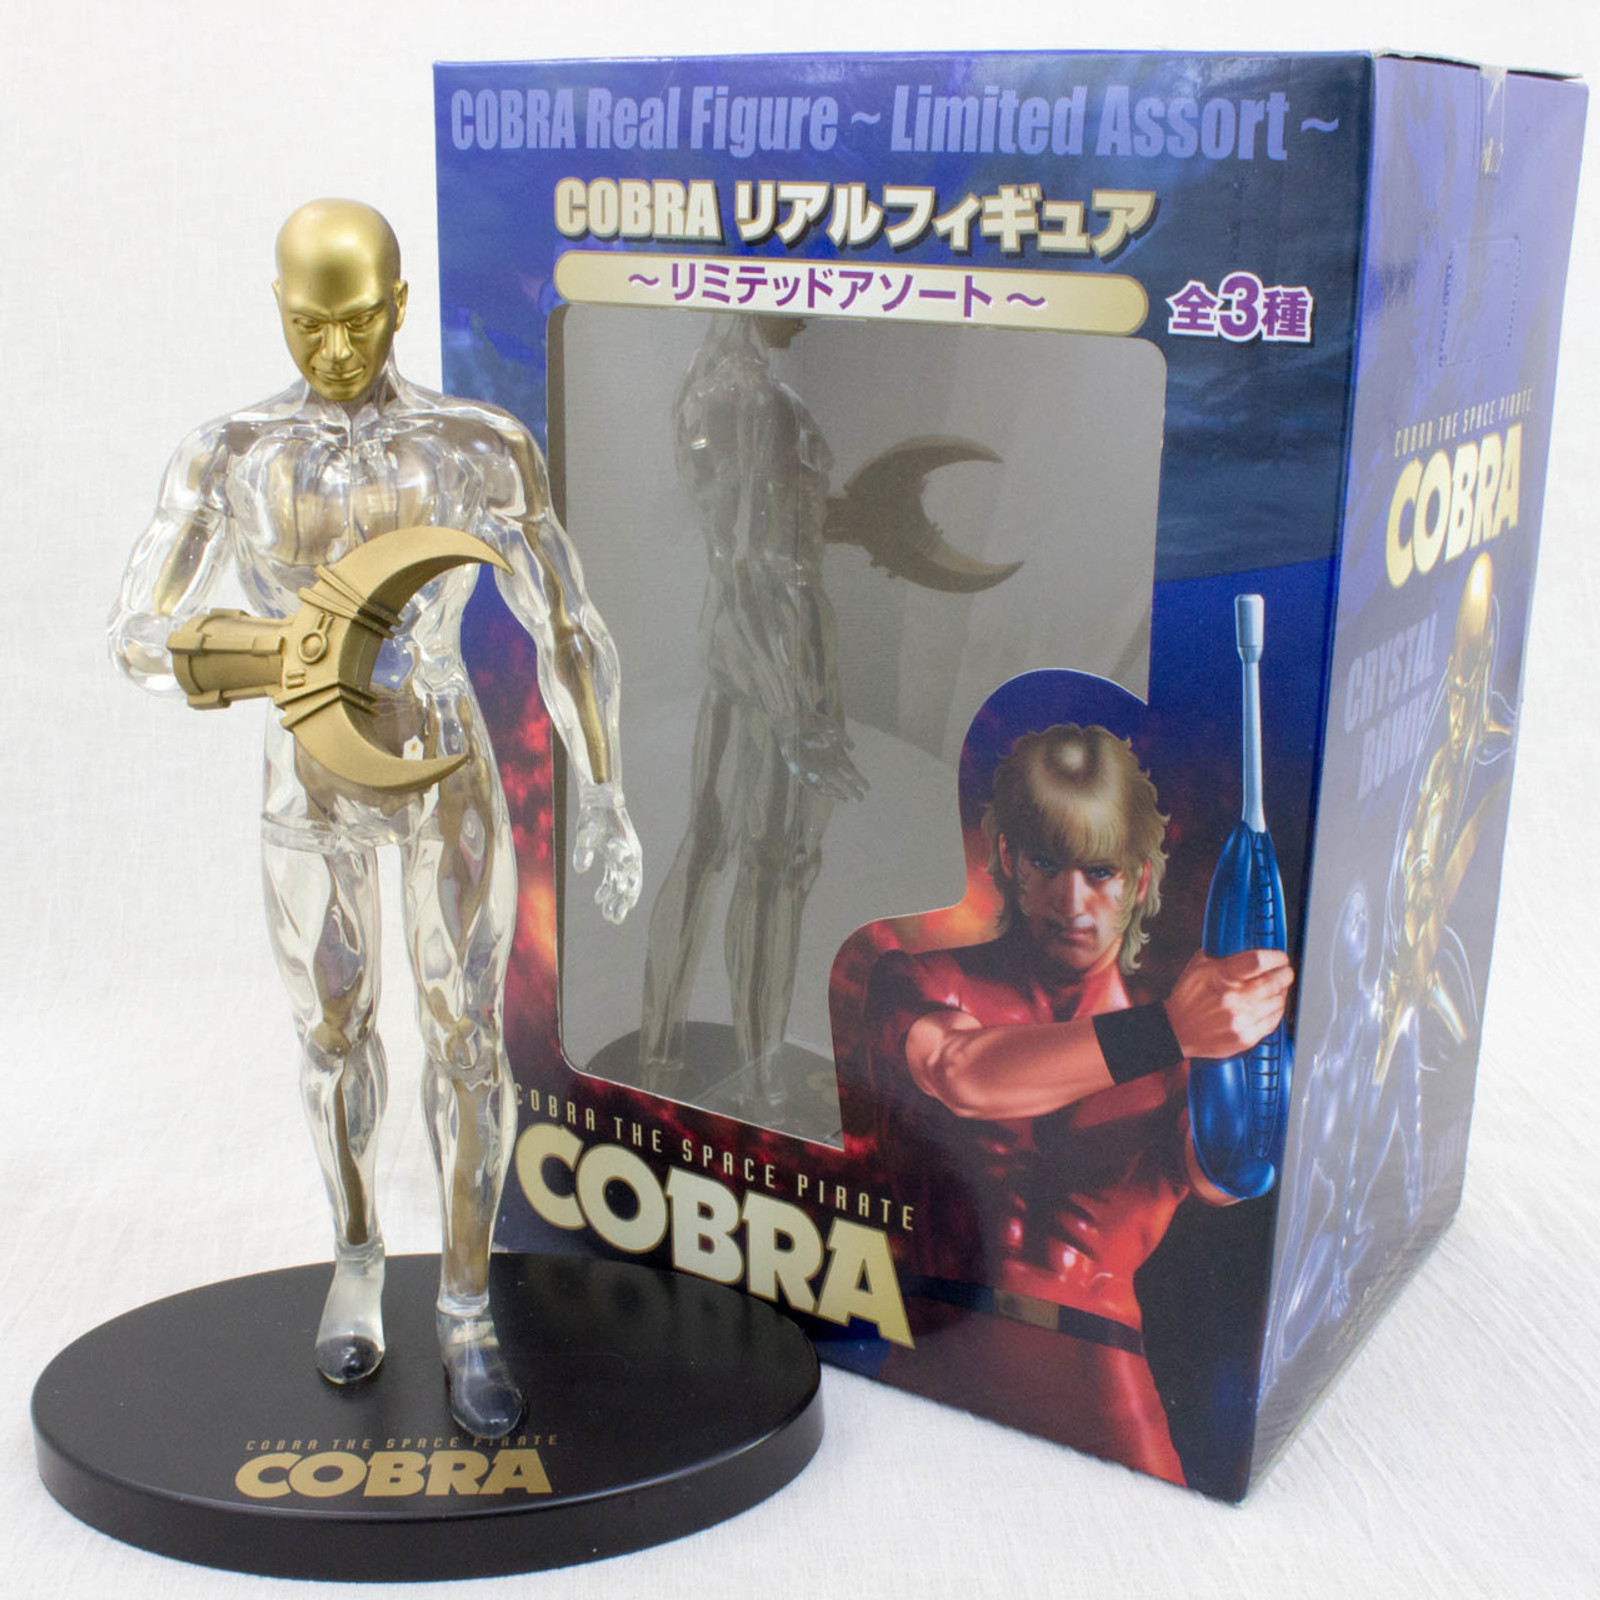 Space Adventure Cobra Crystal Bowie Real Figure Limited Assort JAPAN ANIME MANGA